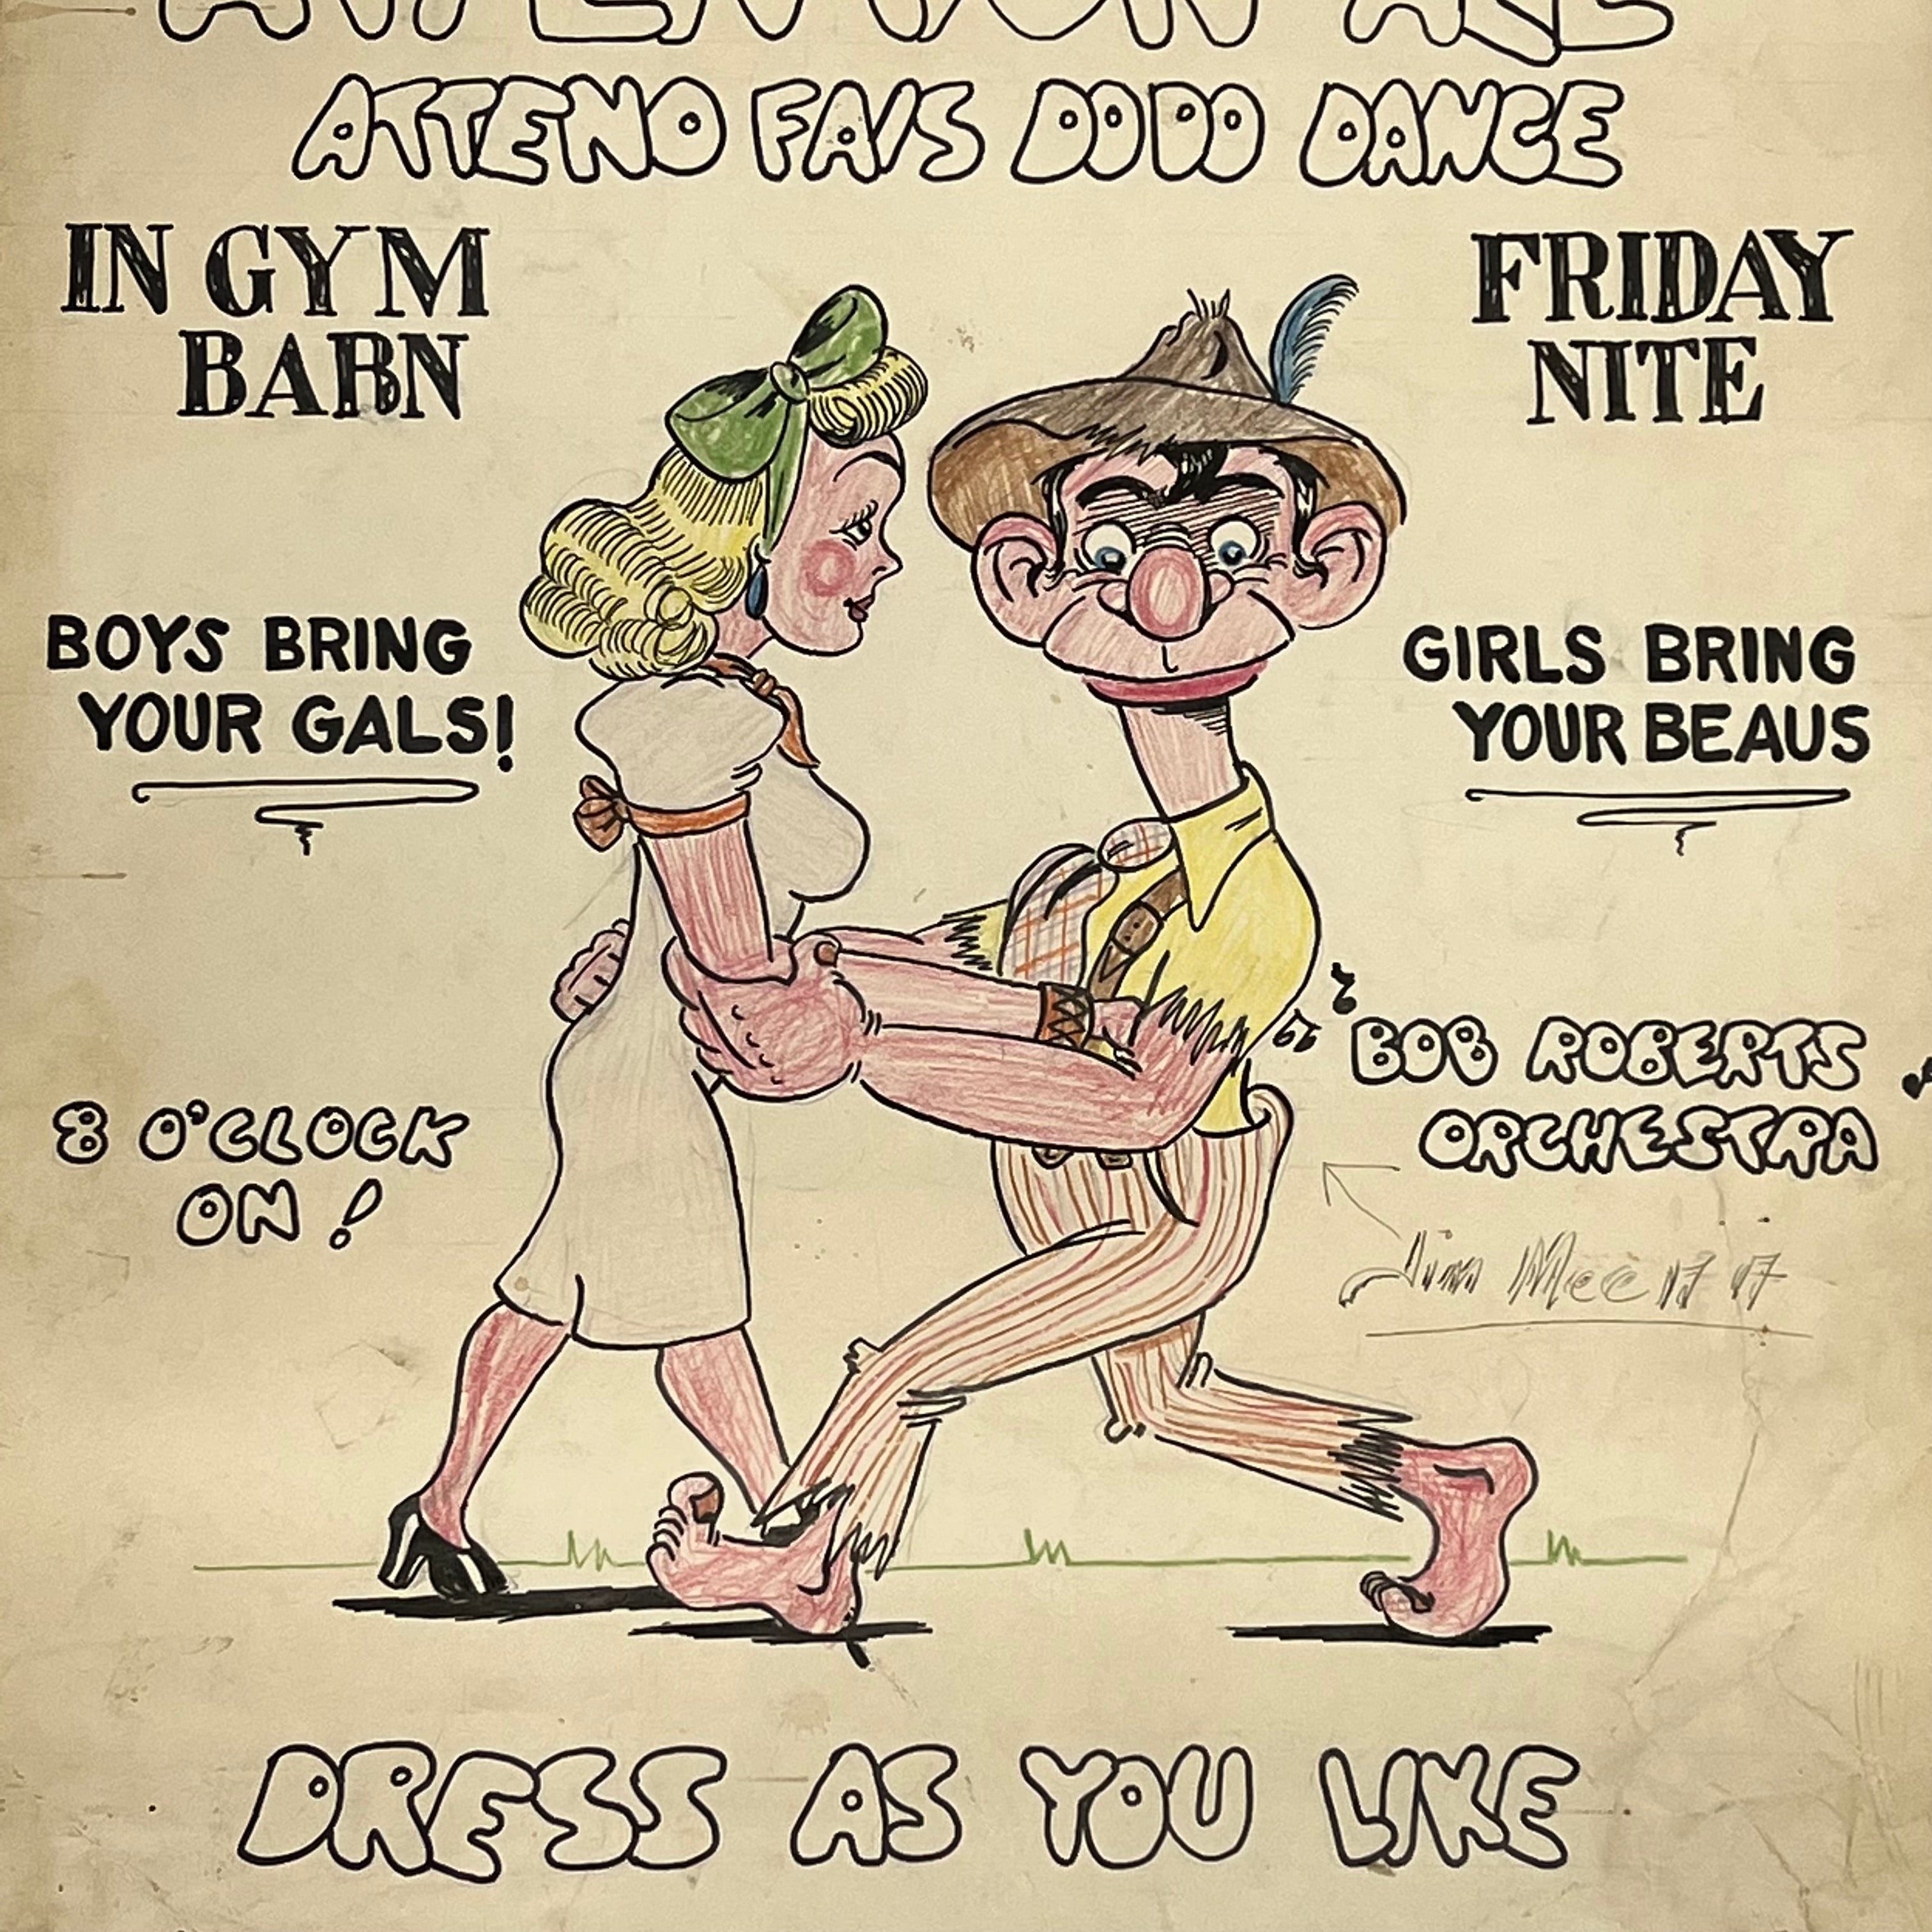 1960s Original Folk Art Poster for Louisiana Country Dance